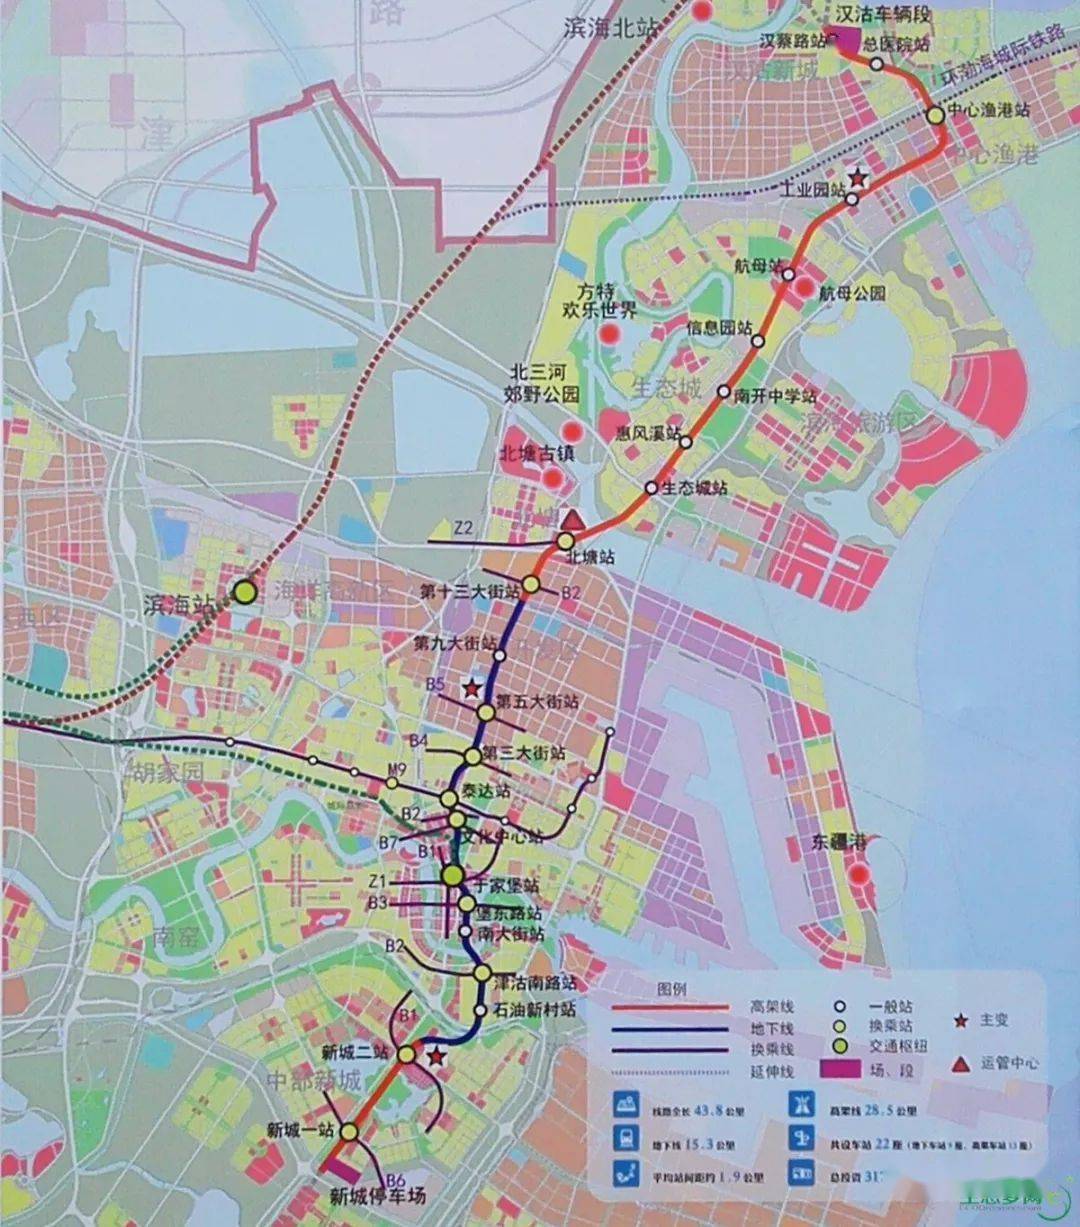 Z4线在汉沽设两站，远期规划与滨海北站接驳-中国网地产